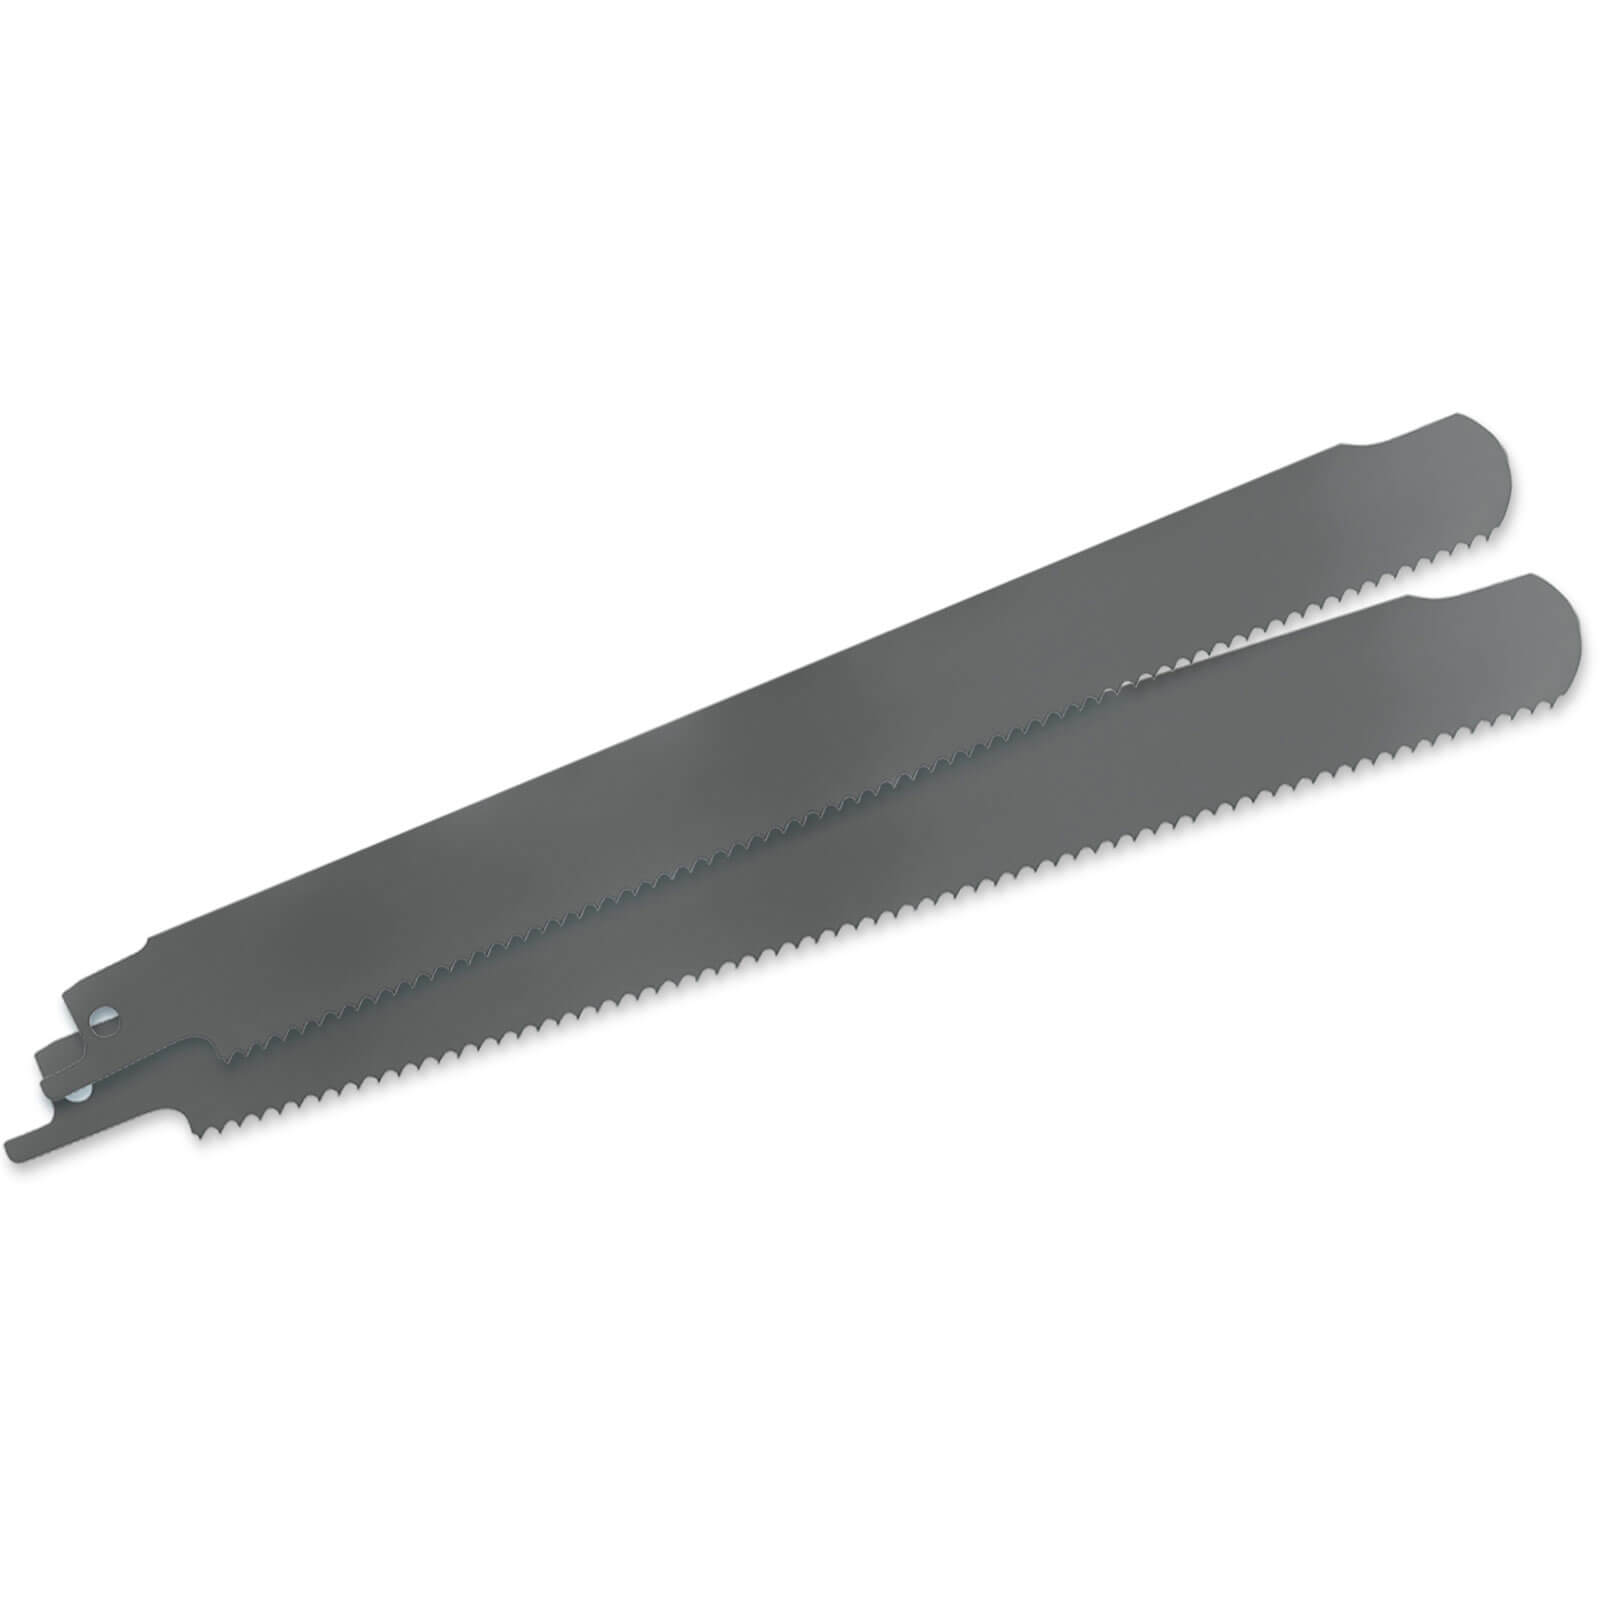 Image of Lenox Pallet Cutting Reciprocating Sabre Saw Blades Bulk Packs 254mm Pack of 250